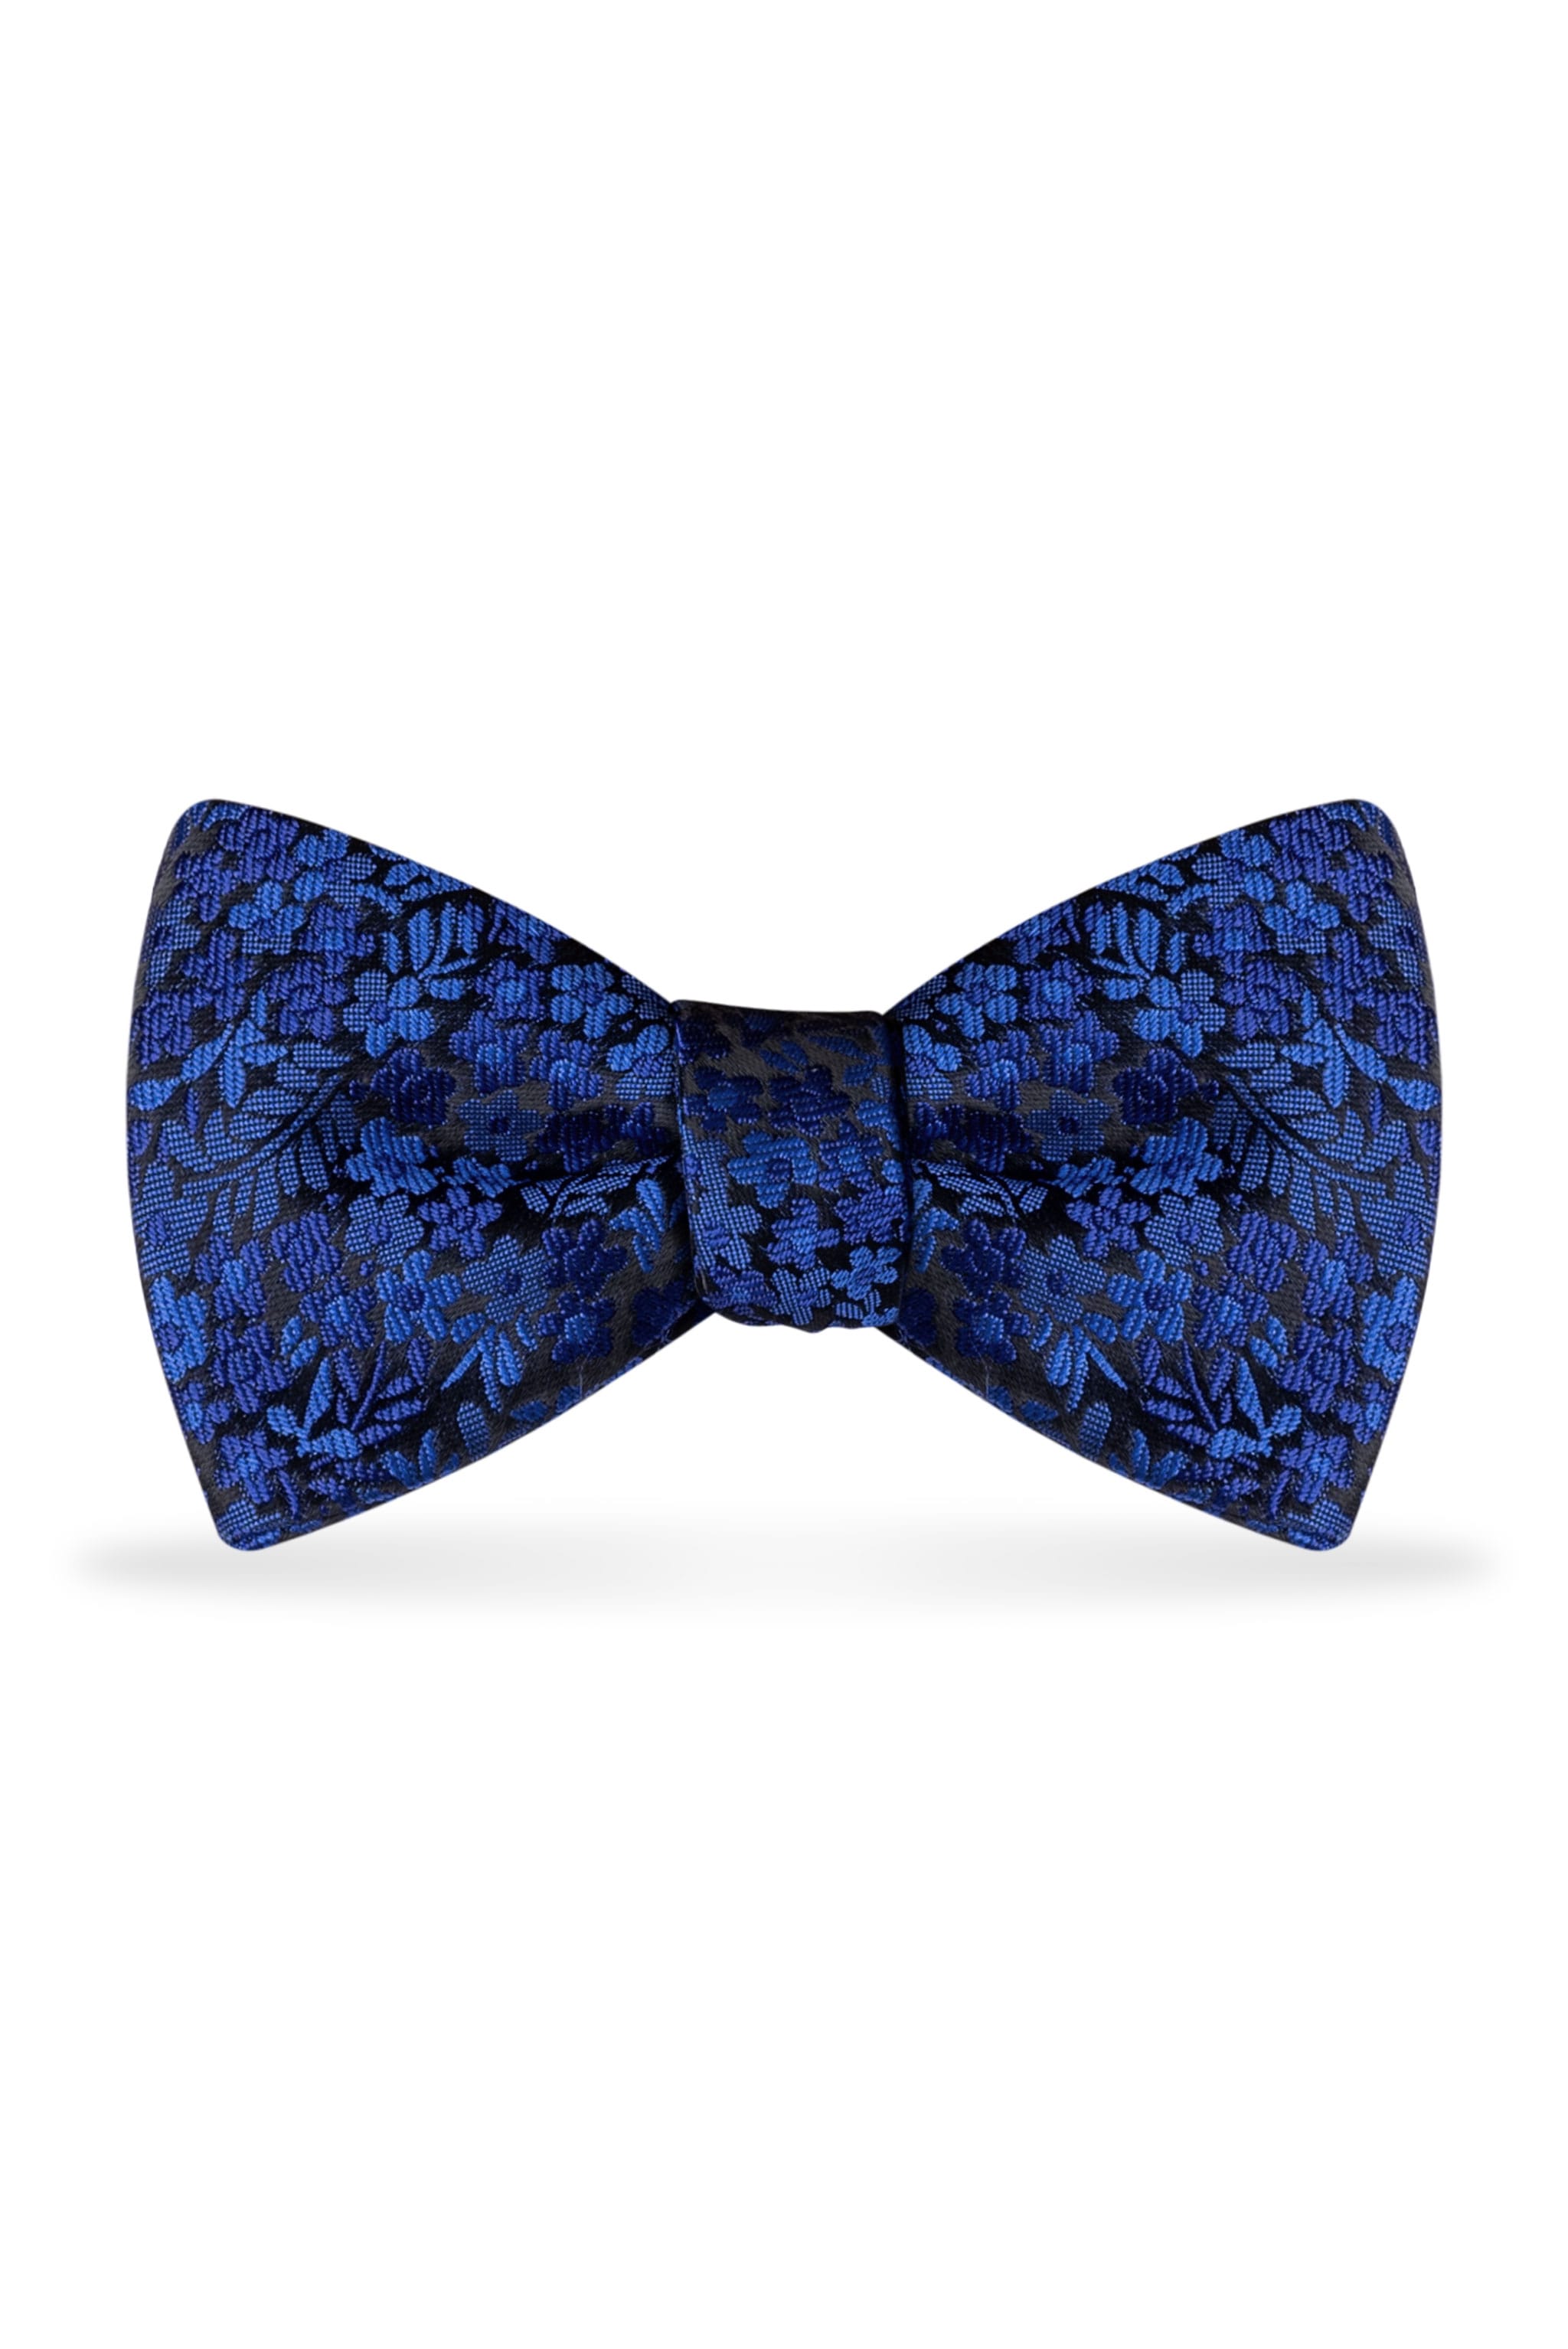 Floral Royal Blue Bow Tie